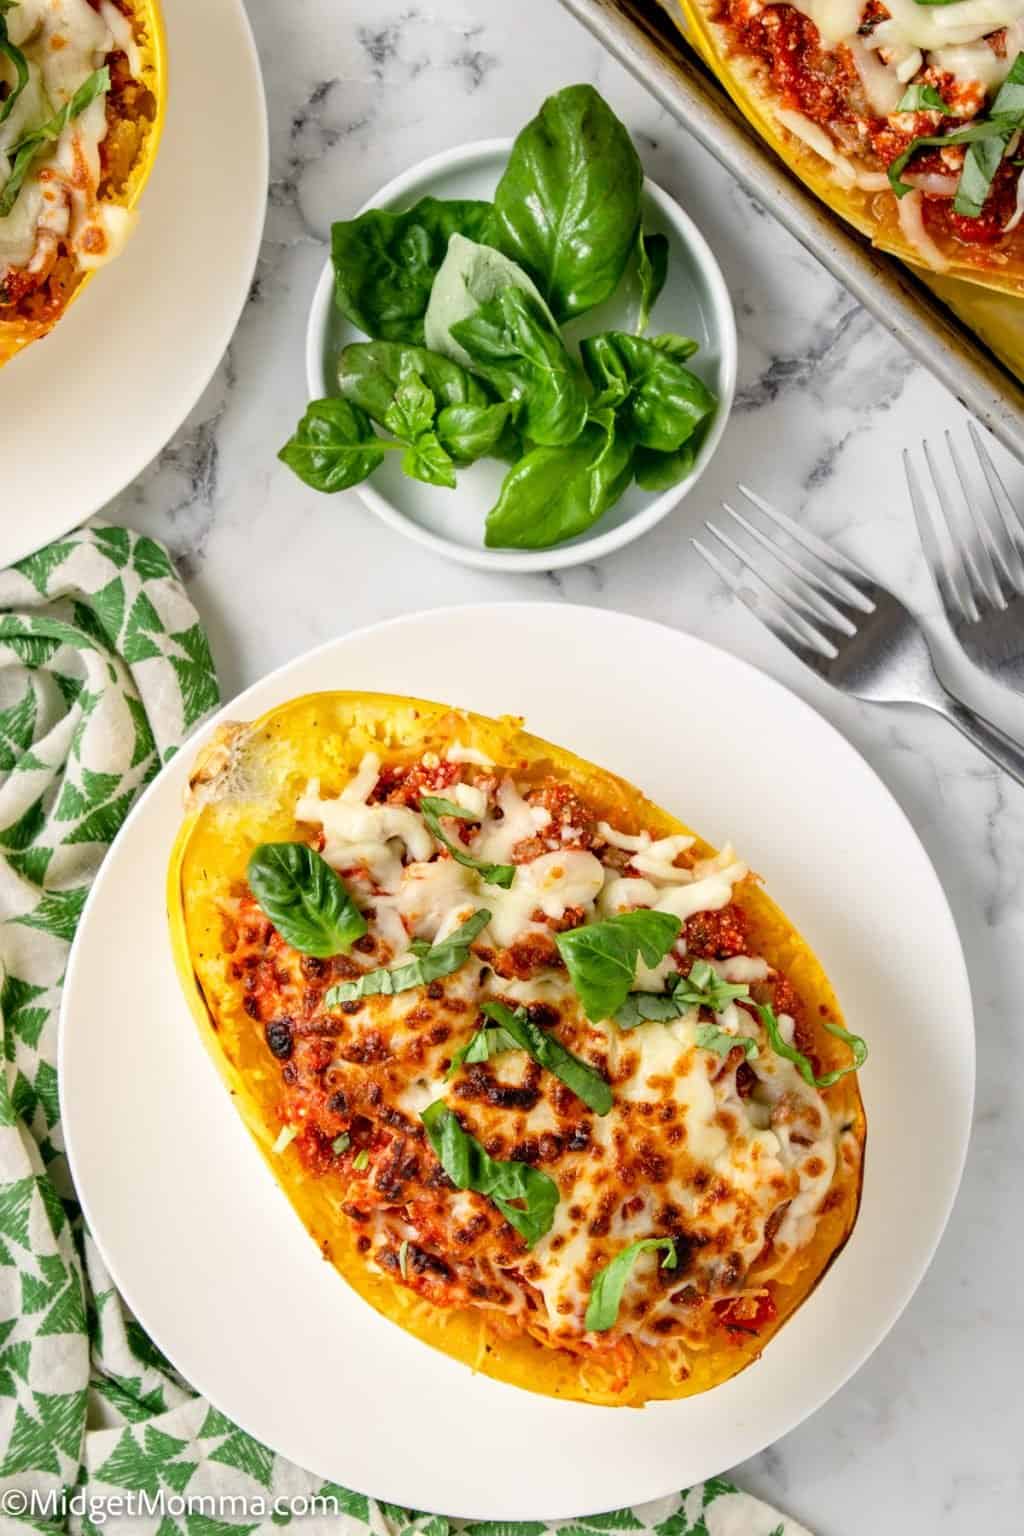 Baked Spaghetti Squash Lasagna with Meat • MidgetMomma